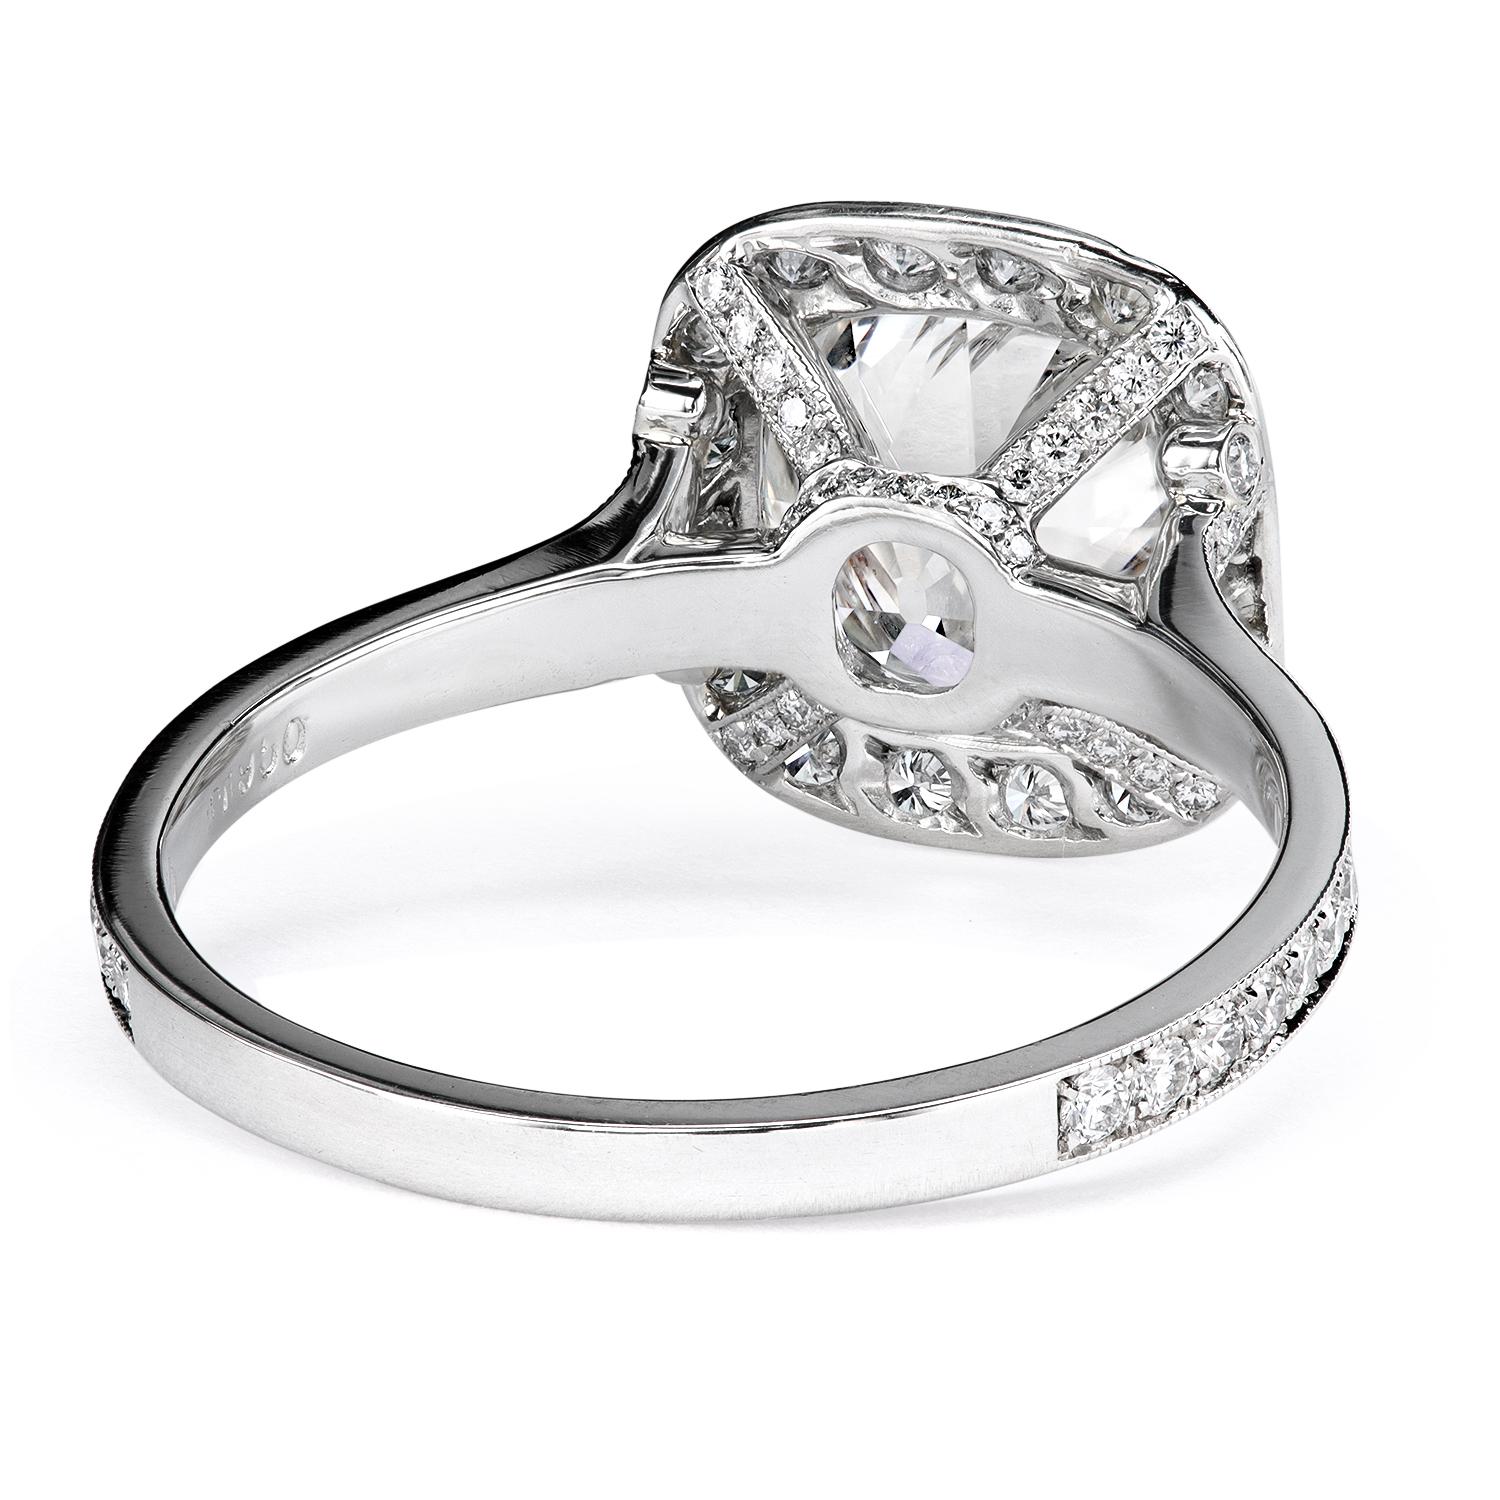 Cushion Cut Leon Mege platinum diamond ring with 2.57-carat cushion diamond For Sale